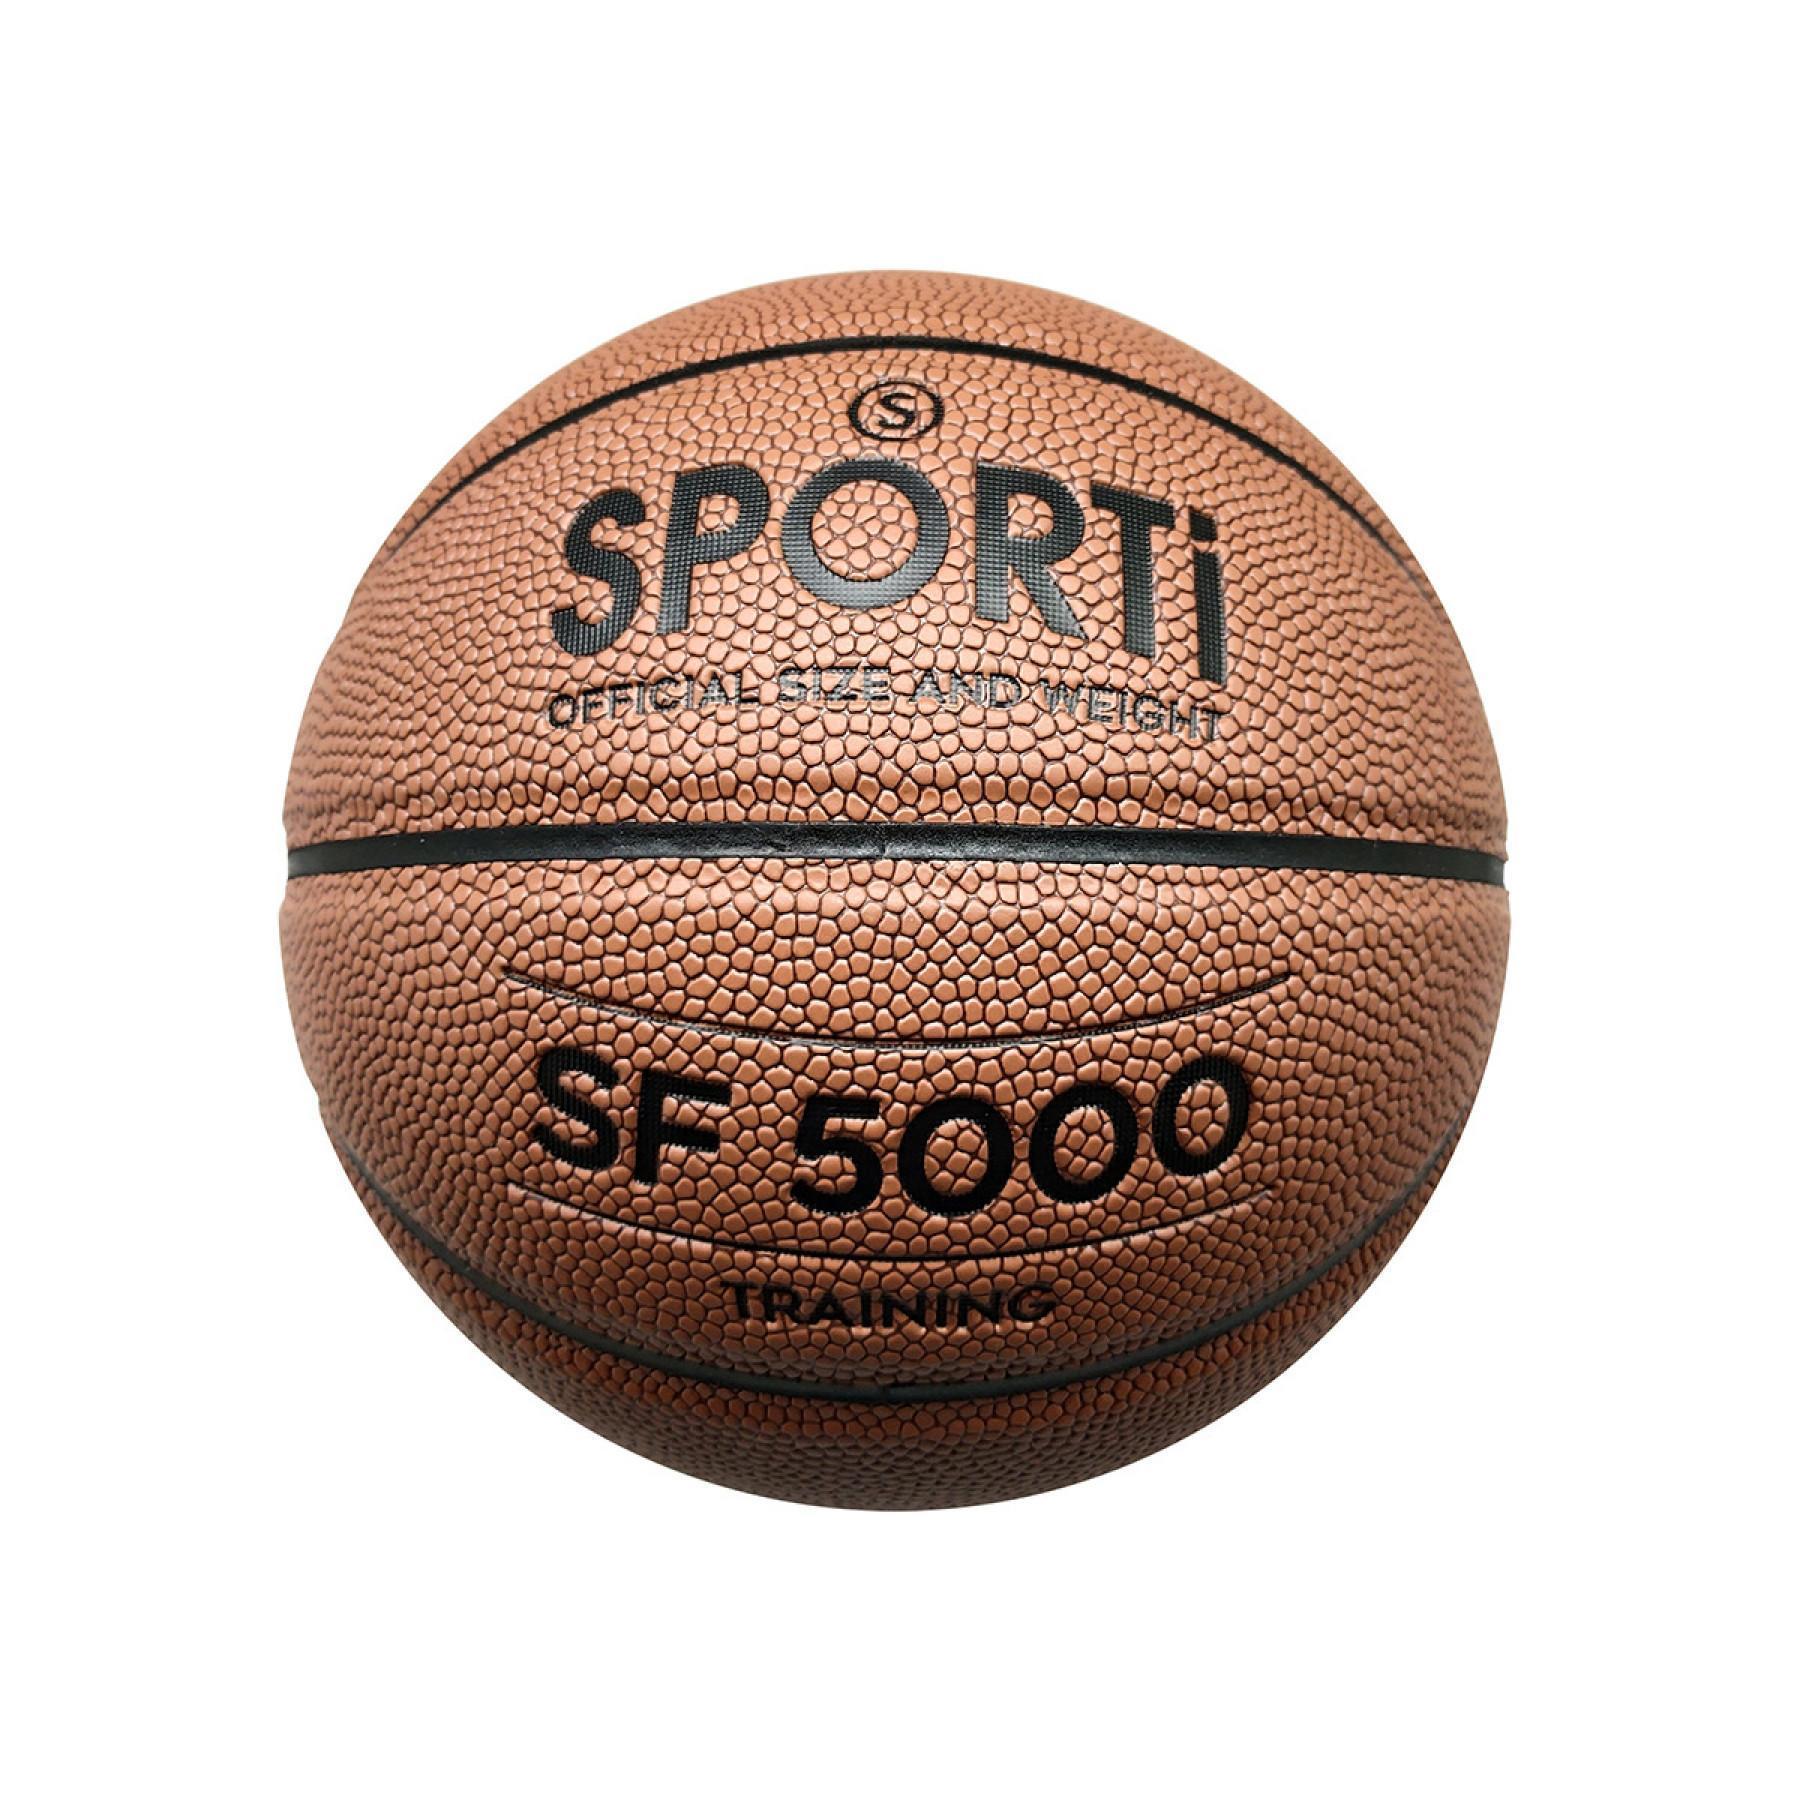 Cellular basketball Sporti France